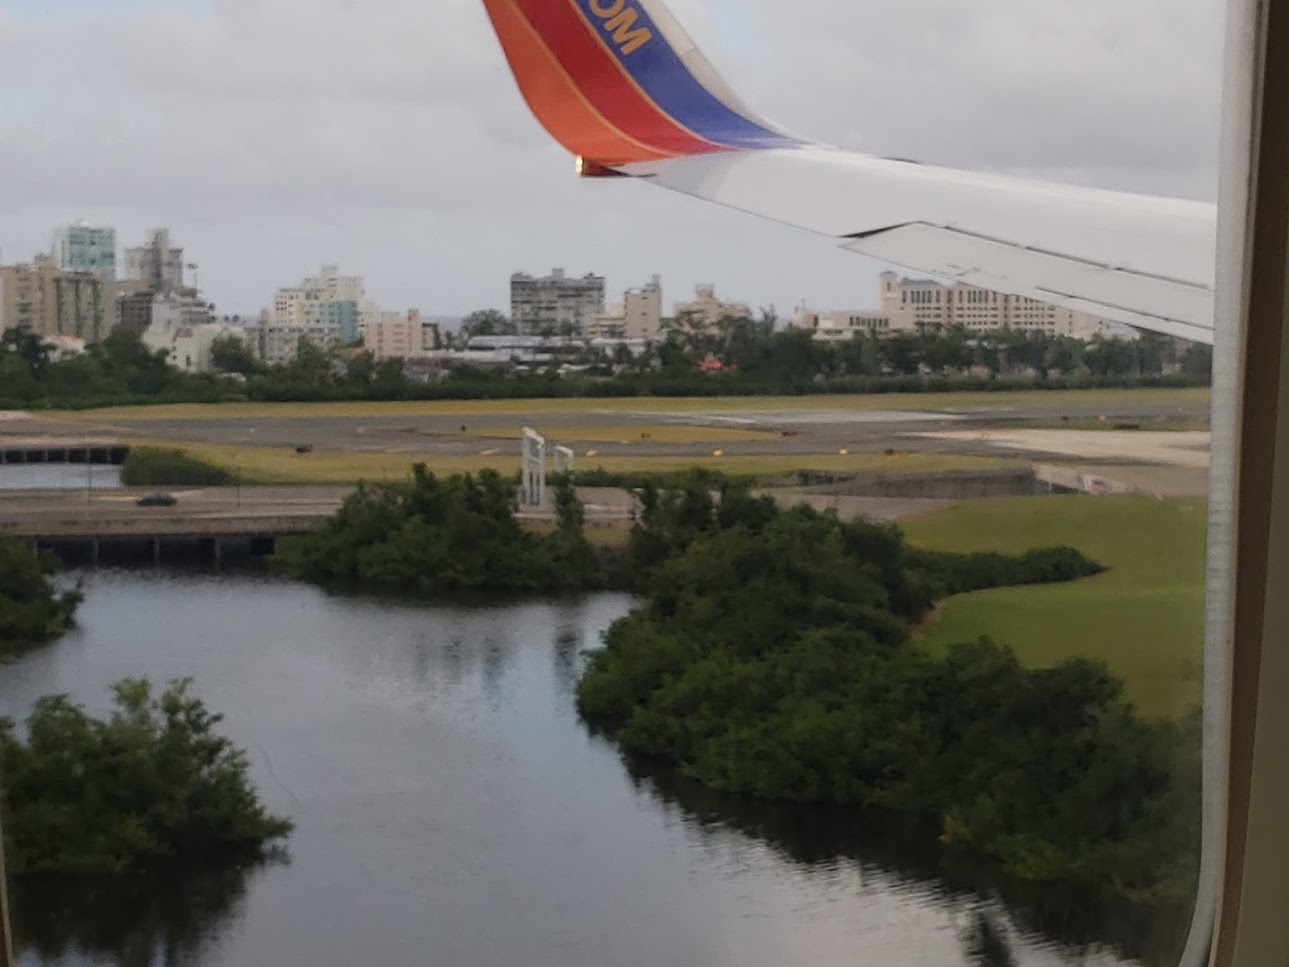 Puerto Rico - August 2018 - Arriving 18